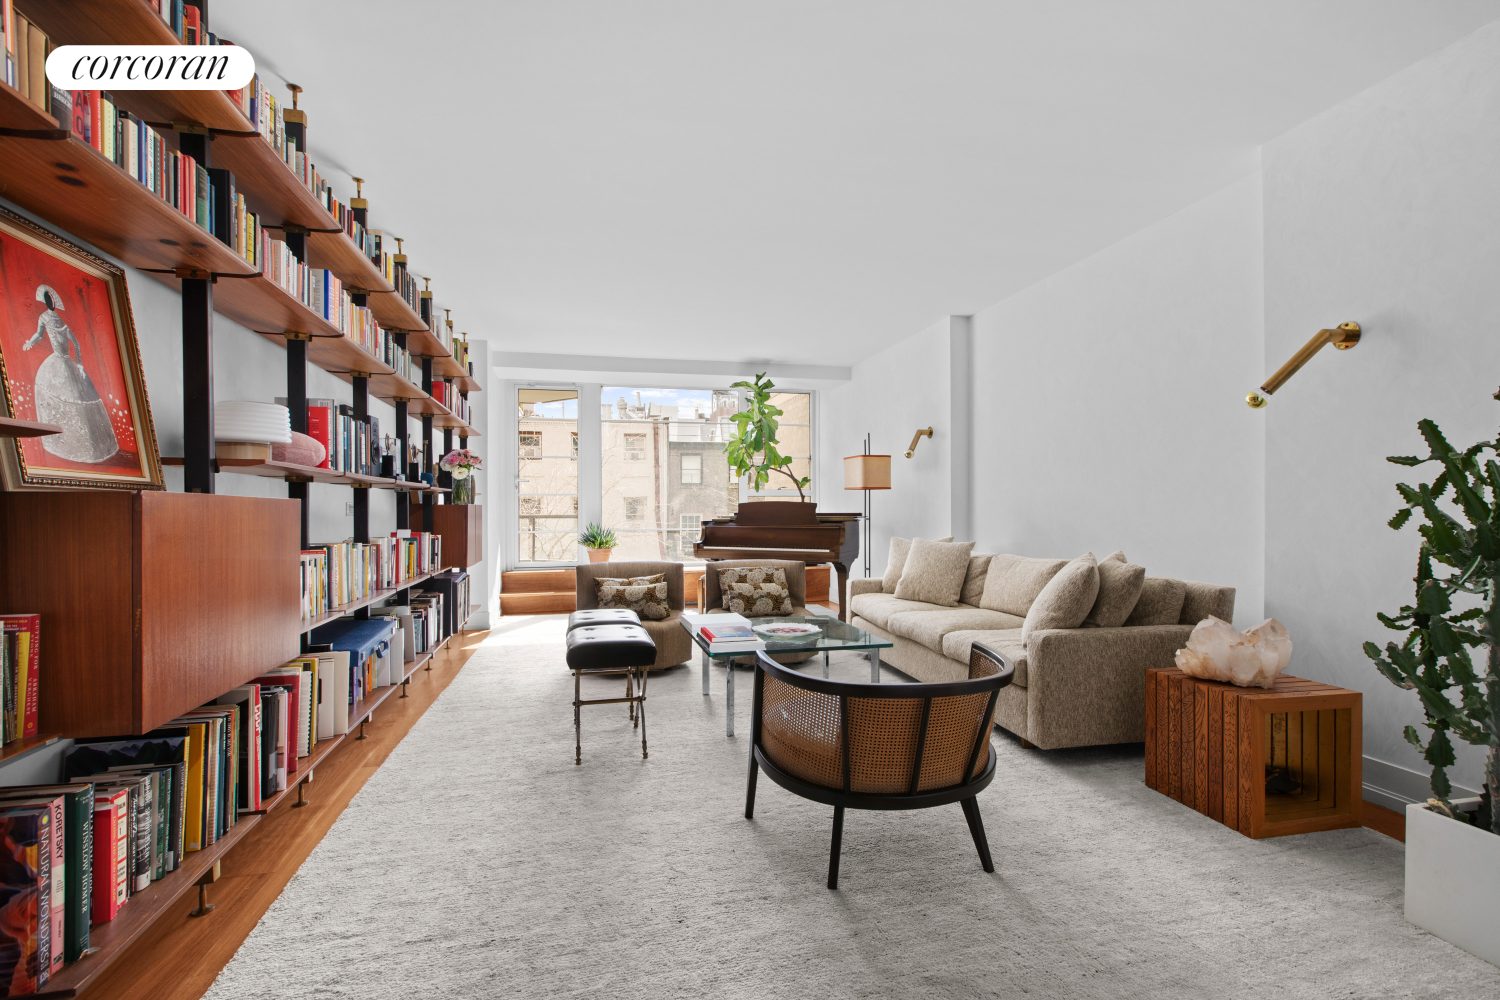 a living room with furniture a bookshelf and a book shelf